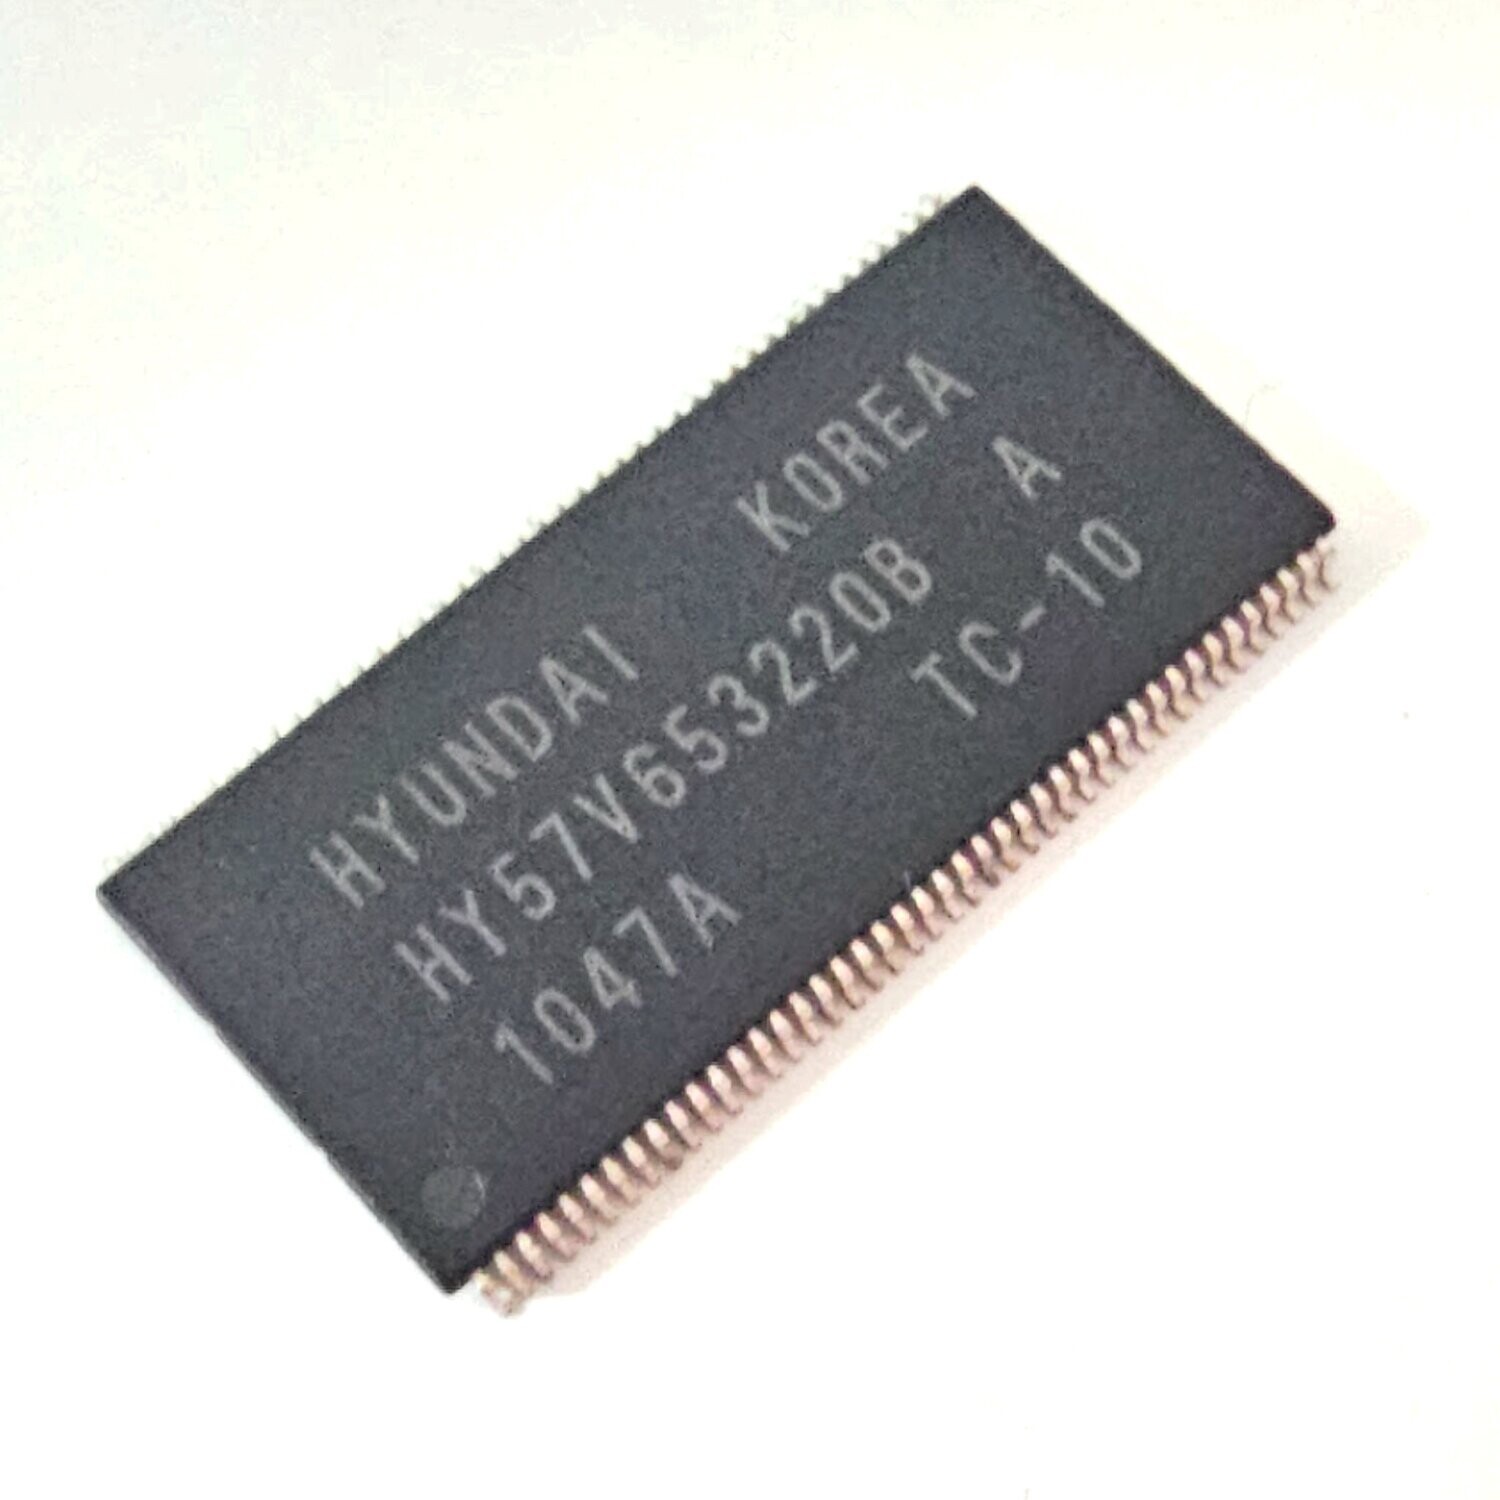 64Mbit Synchronous DRAM (HY57V653220BTC)